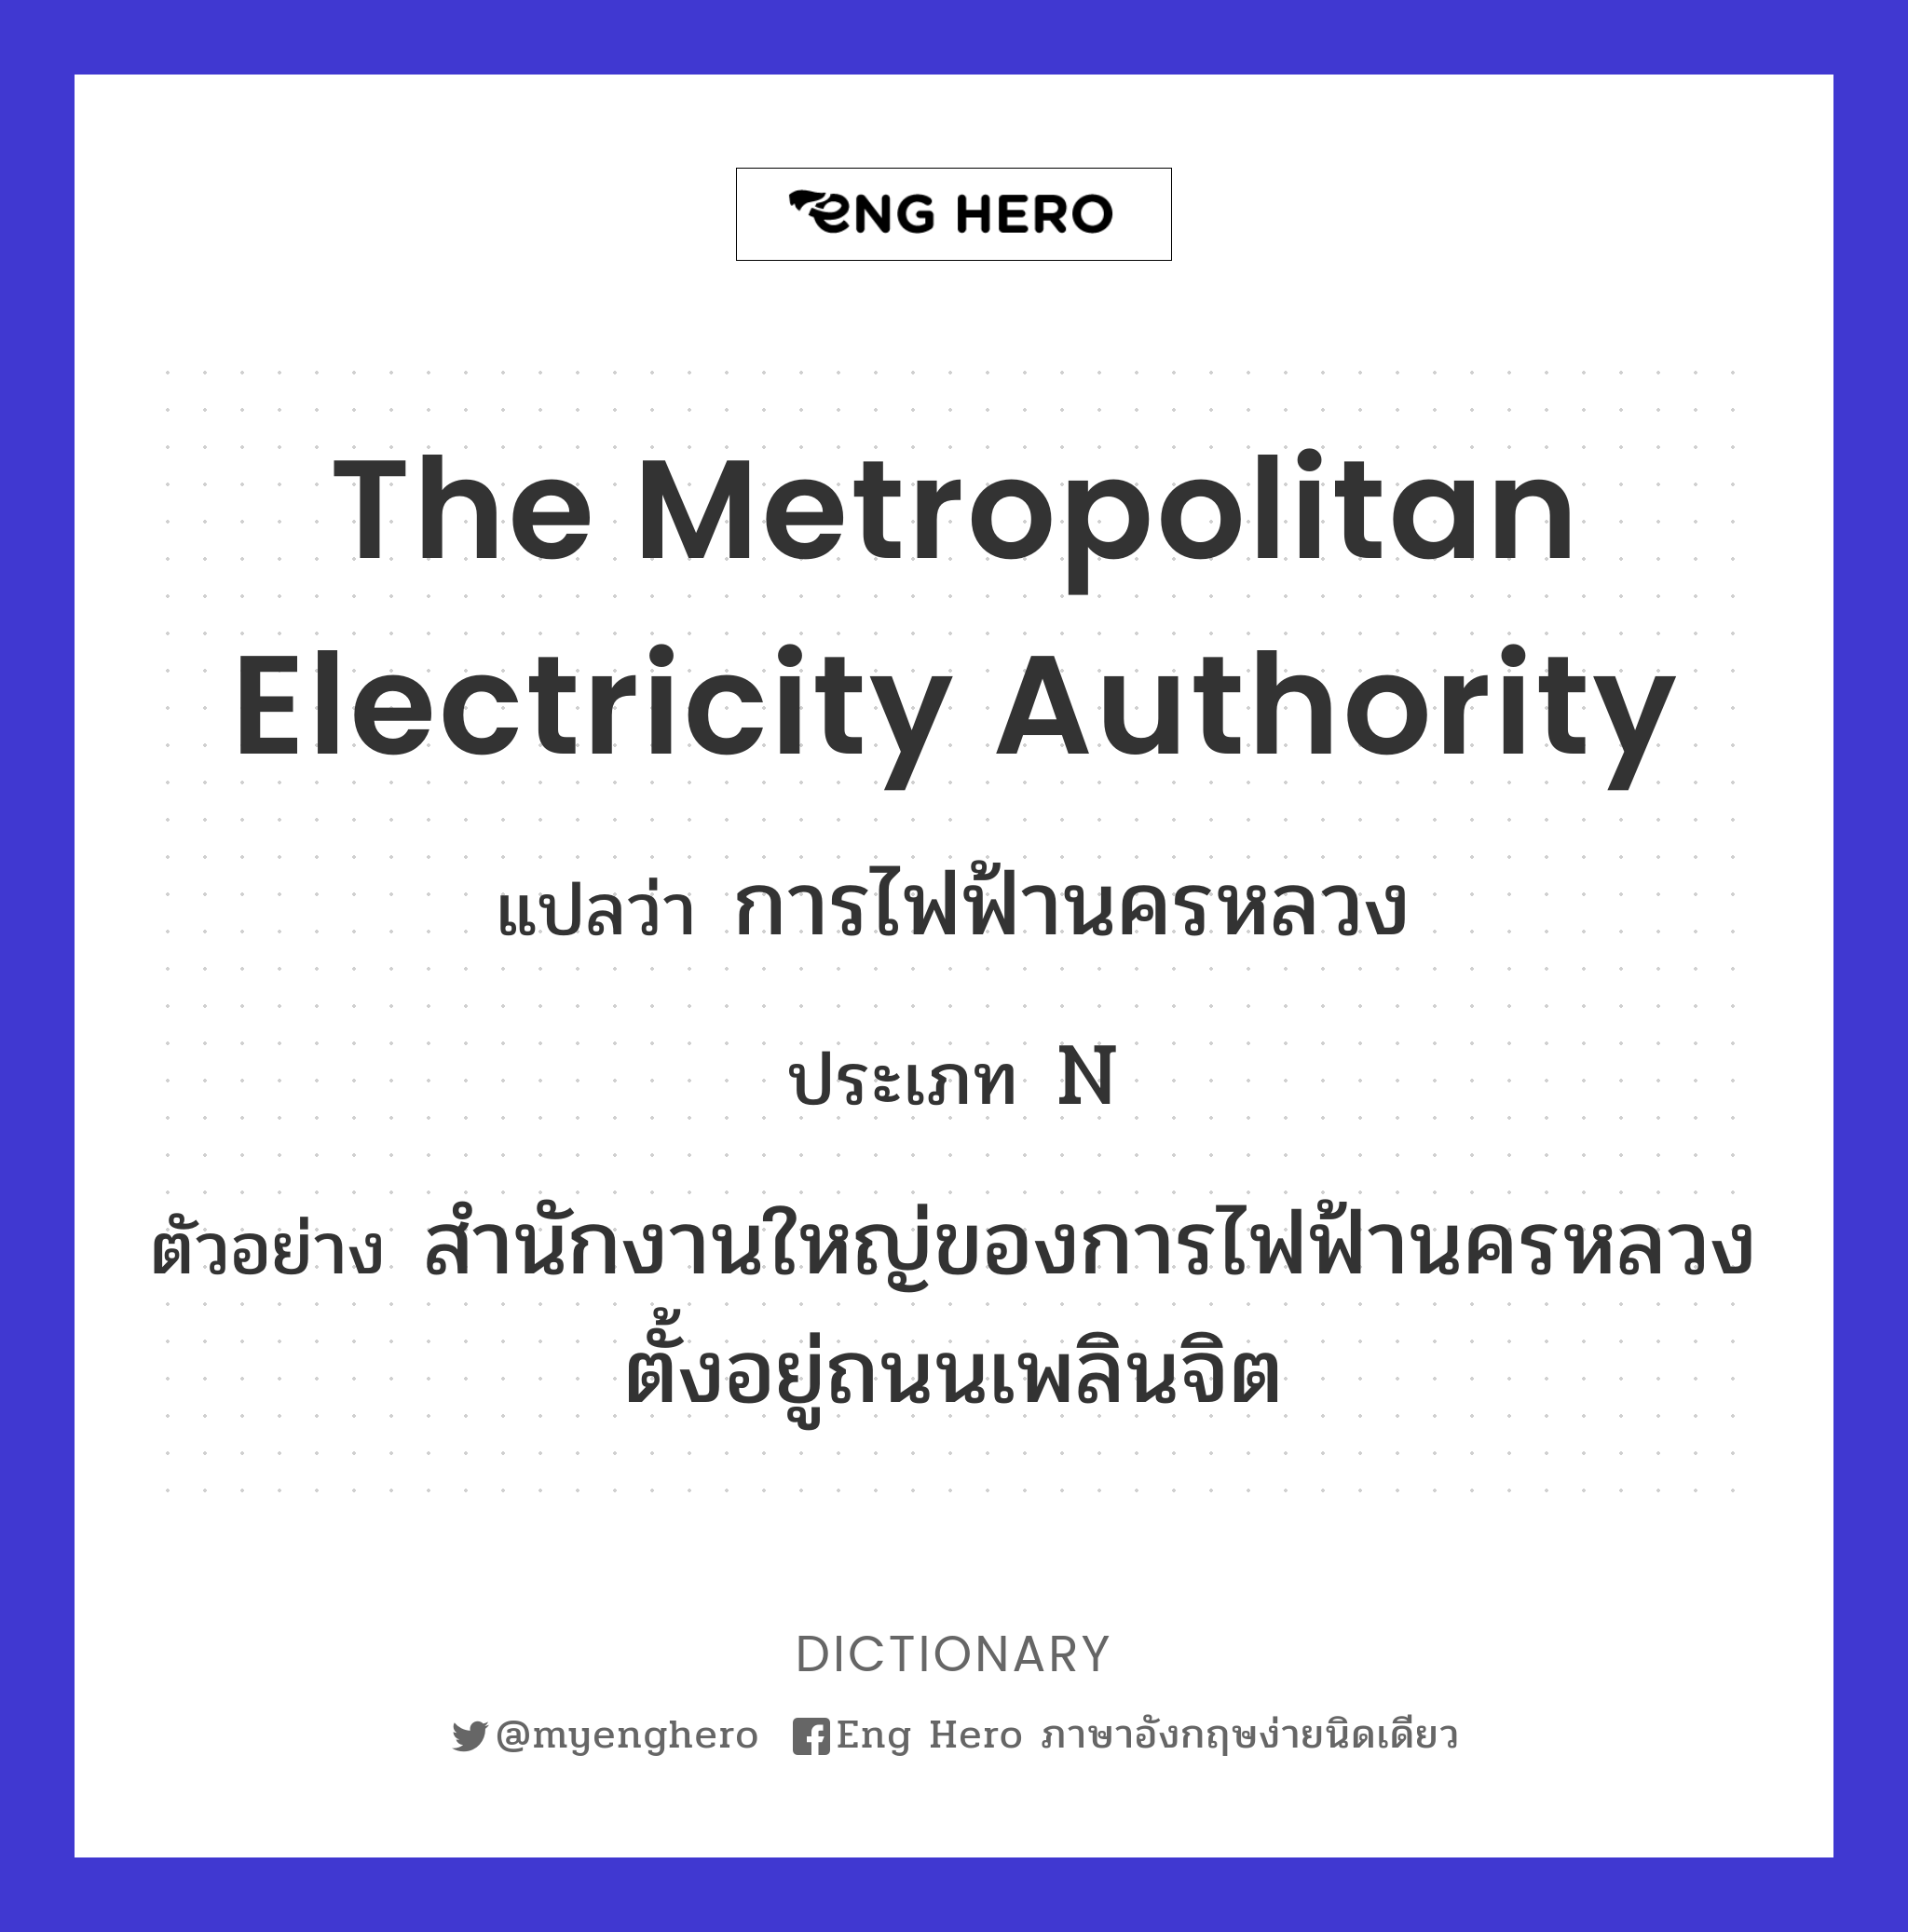 The Metropolitan Electricity Authority